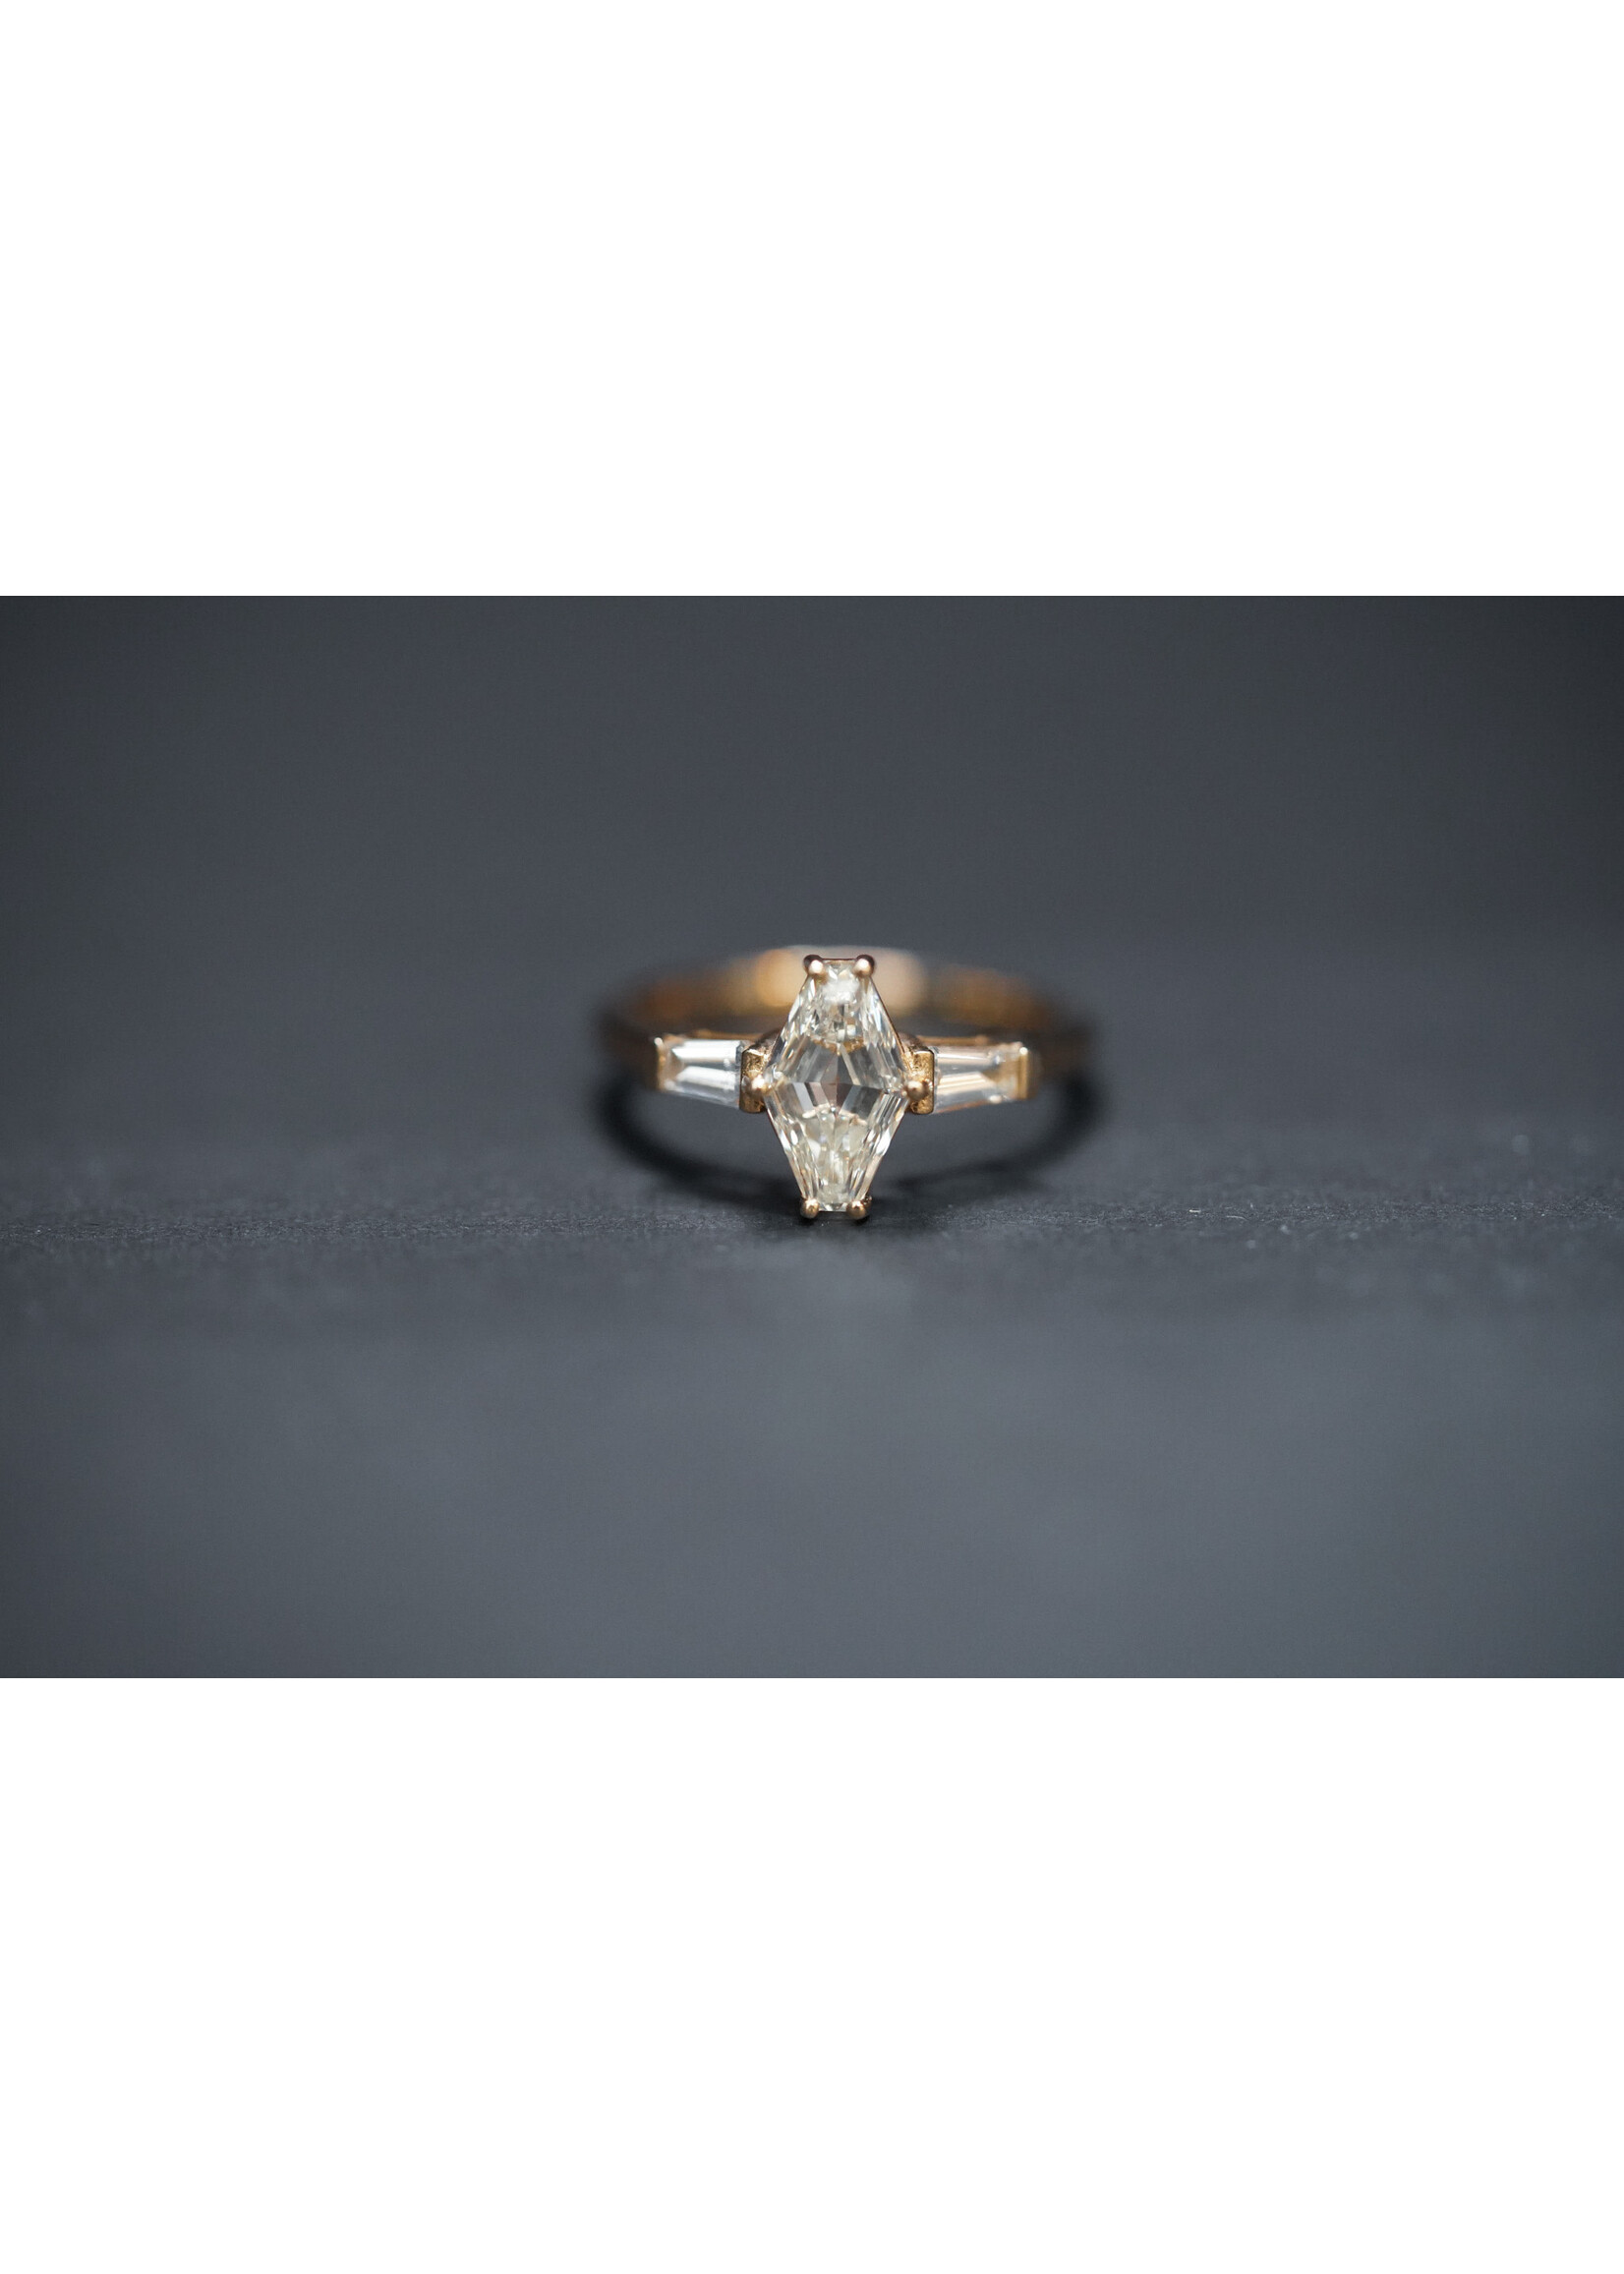 14KY 3.28g 1.75ctw (1.51ctr) K/VS2 Rhomboid Cut Diamond Engagement Ring (size 7)